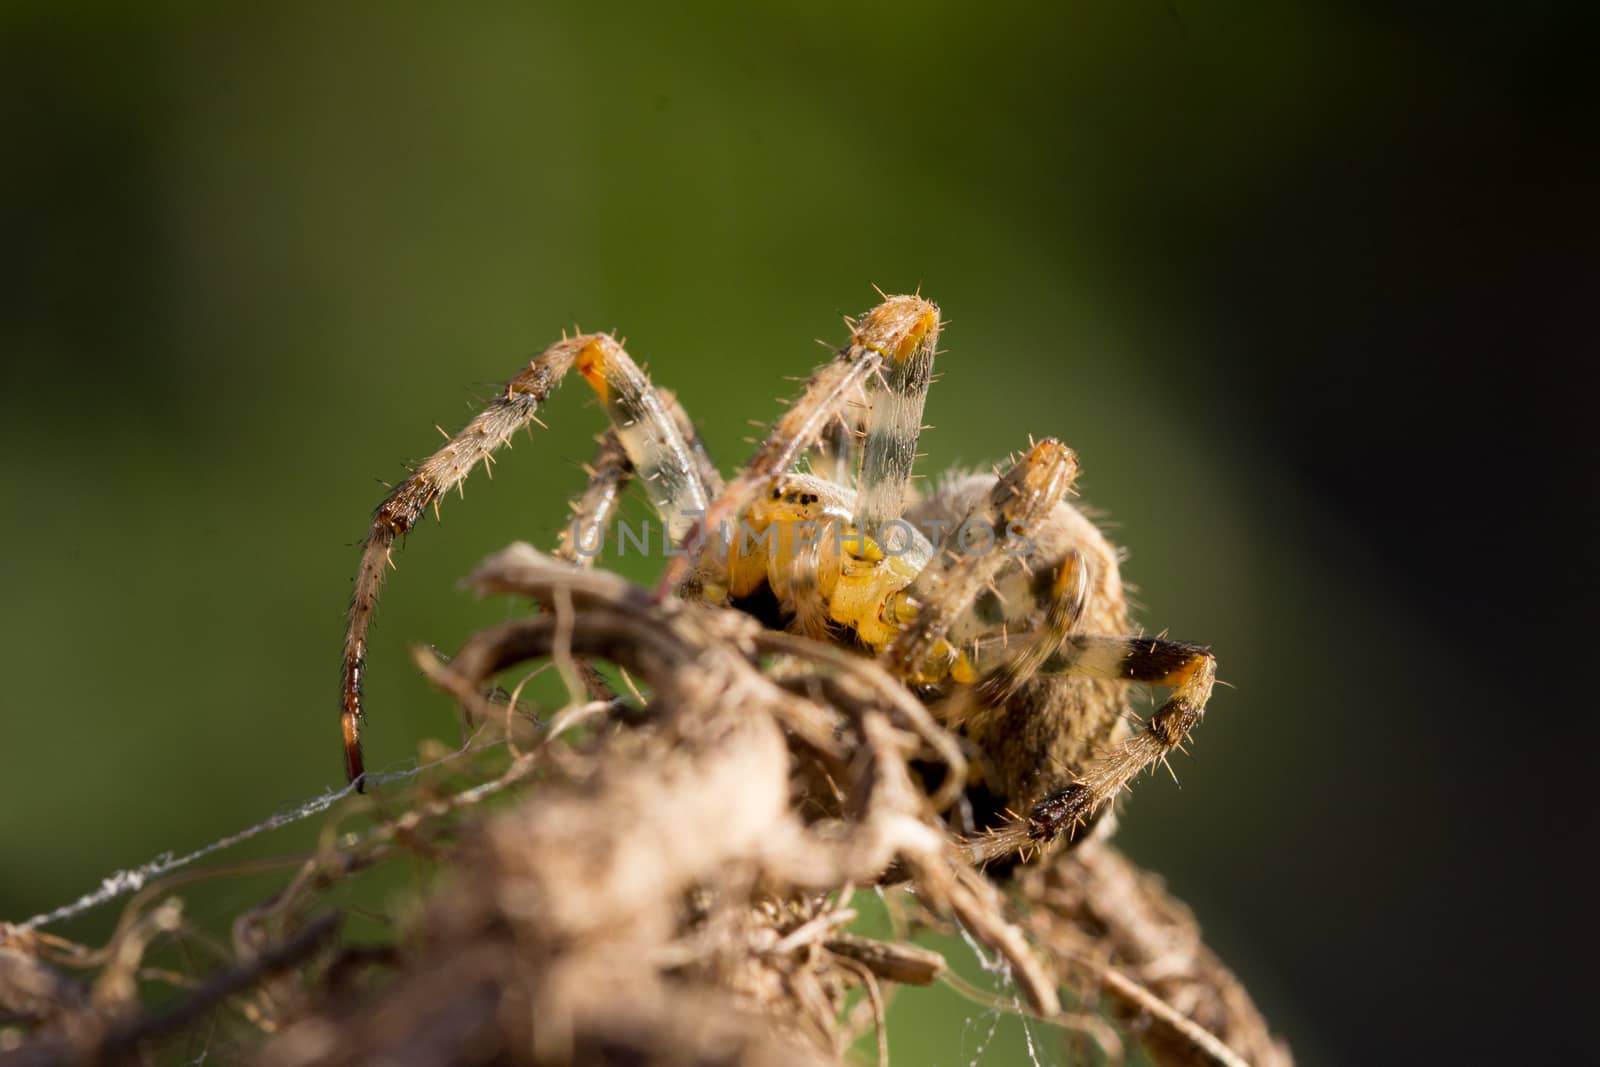 Common Garden Spider by magicbones